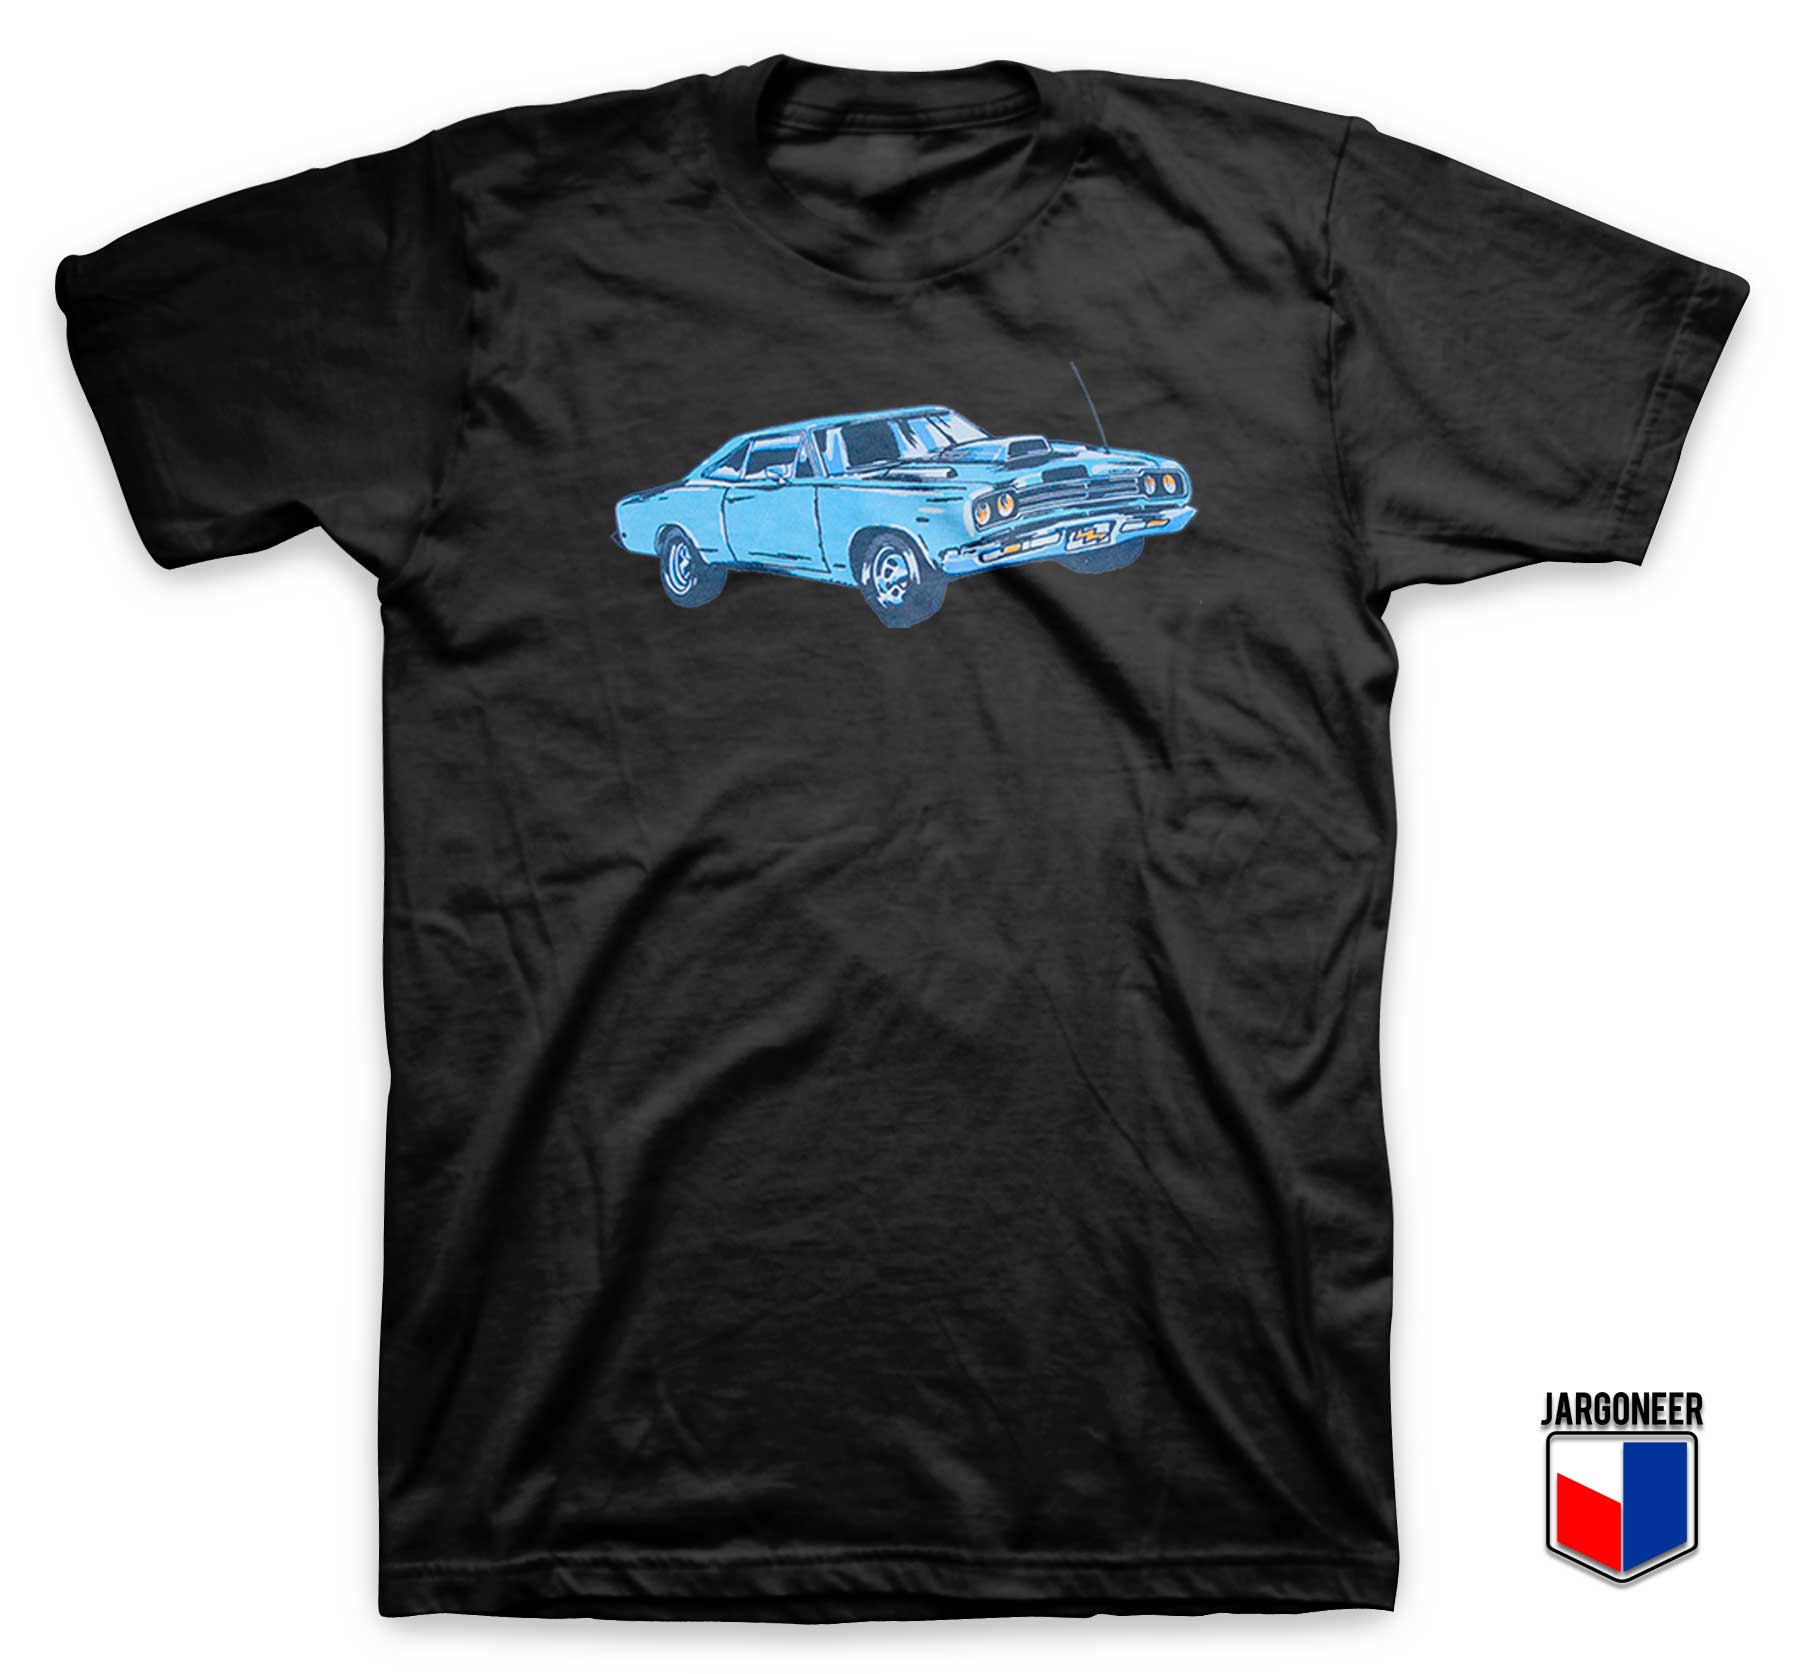 Aleena Motor Show 1984 T Shirt - Shop Unique Graphic Cool Shirt Designs